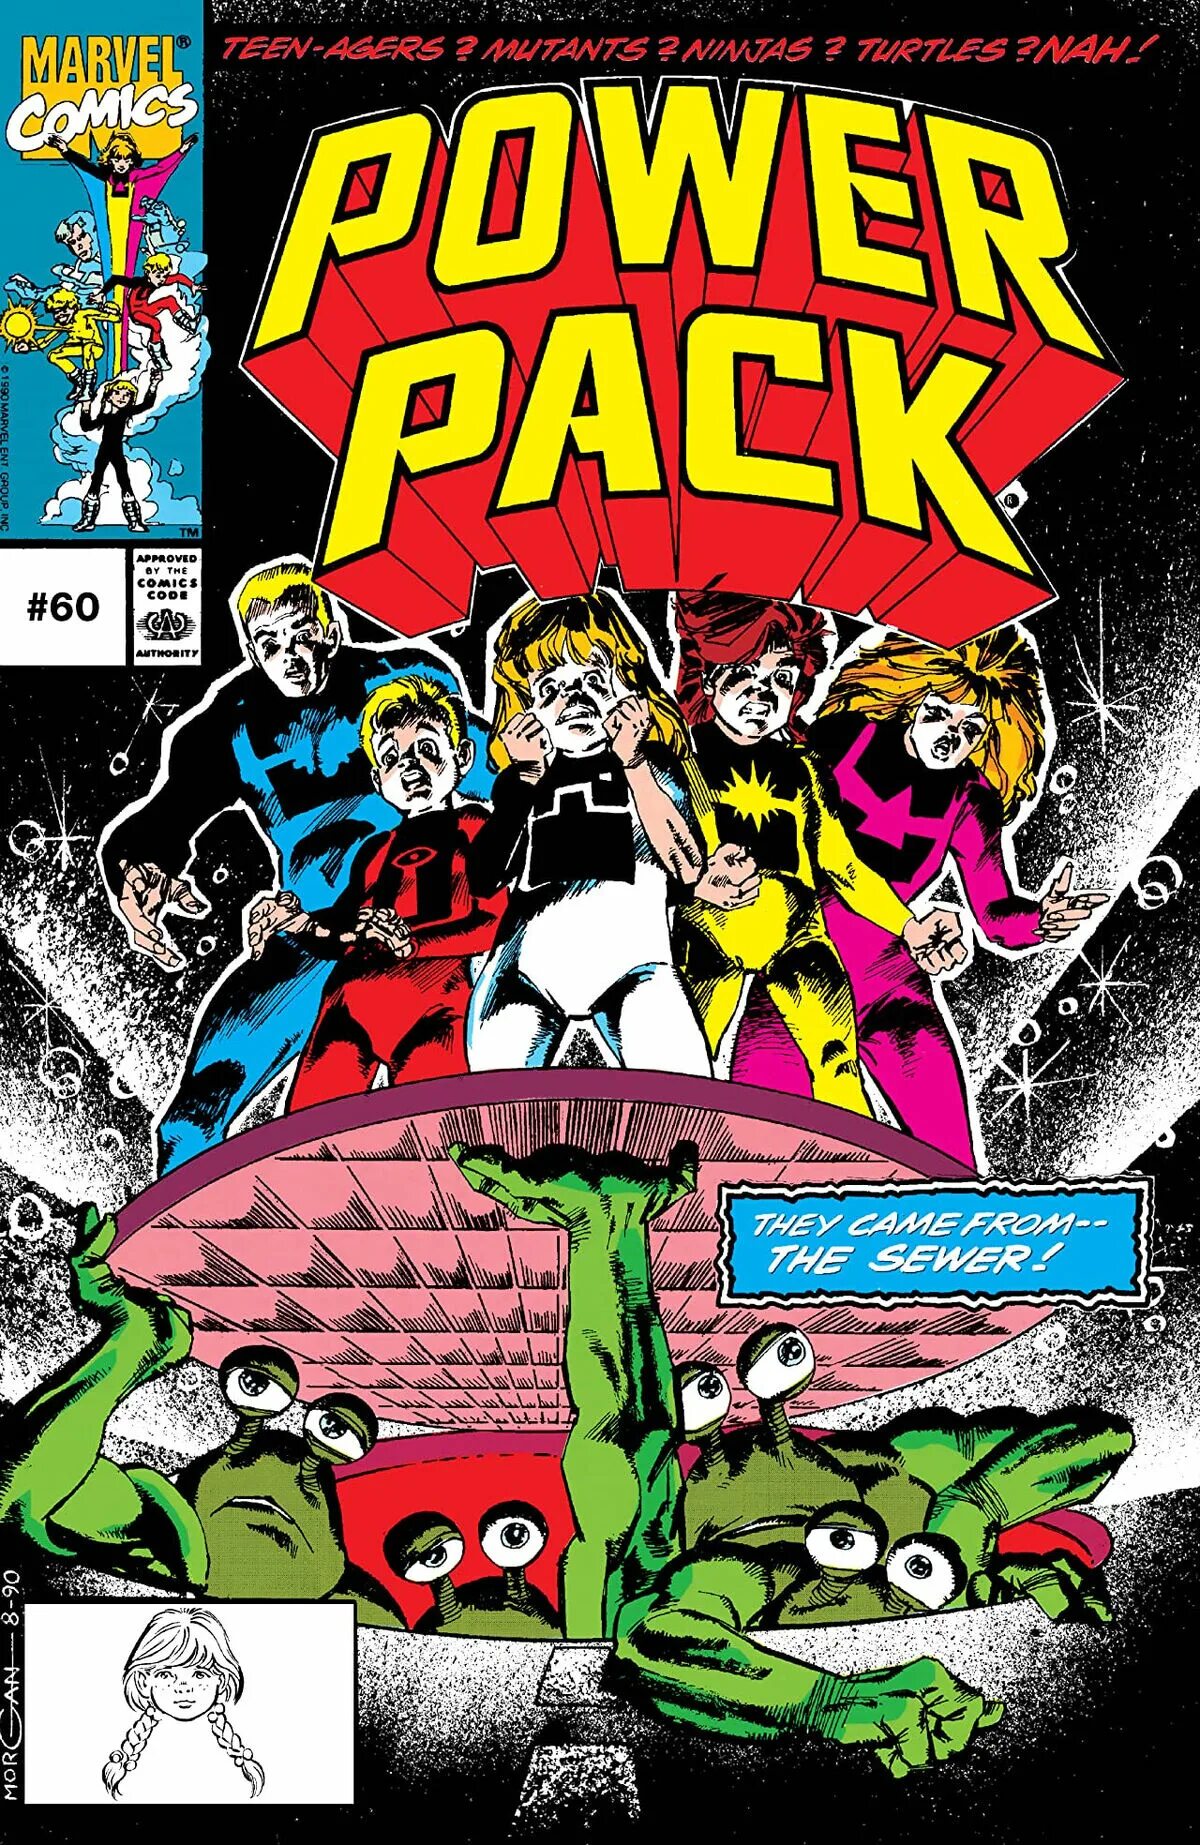 Power packing комиксы. Power Pack Marvel. POWERPACK комиксы. Power Pack Marvel Comics.